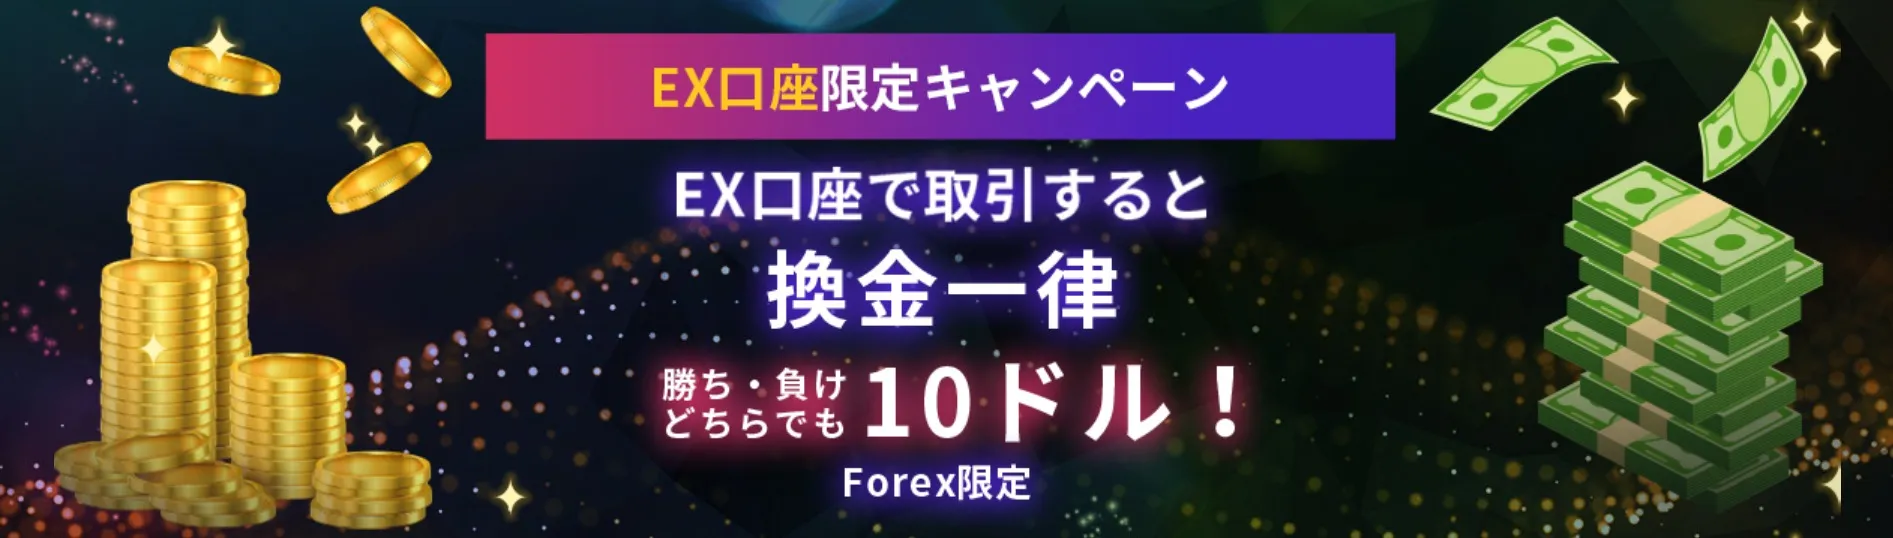 IS6FX(アイエスシックスエフエックス)のEX口座限定換金キャンペーン